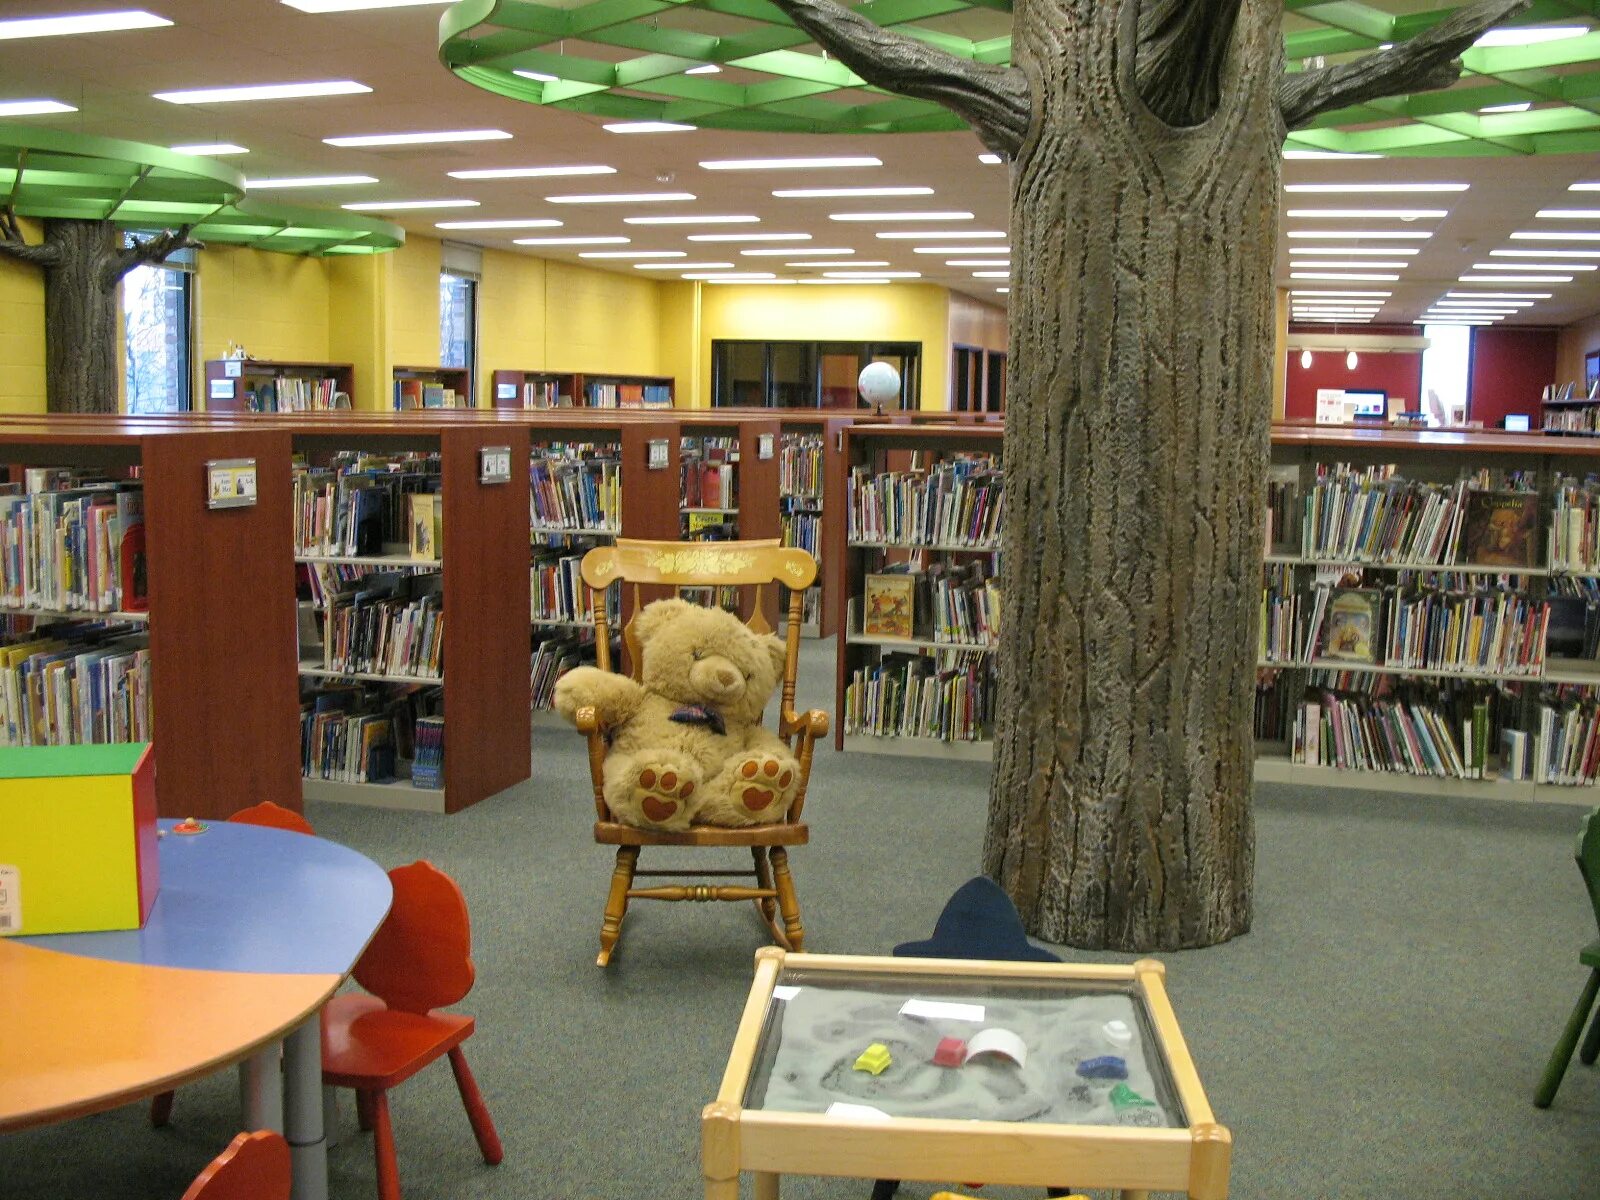 City library. Публичная библиотека Канзас-Сити США внутри. Центральная библиотека (Канзас-Сити, США). Публичная библиотека в Канзас Сити штат Миссури США. Библиотека Канзас Сити внутри.